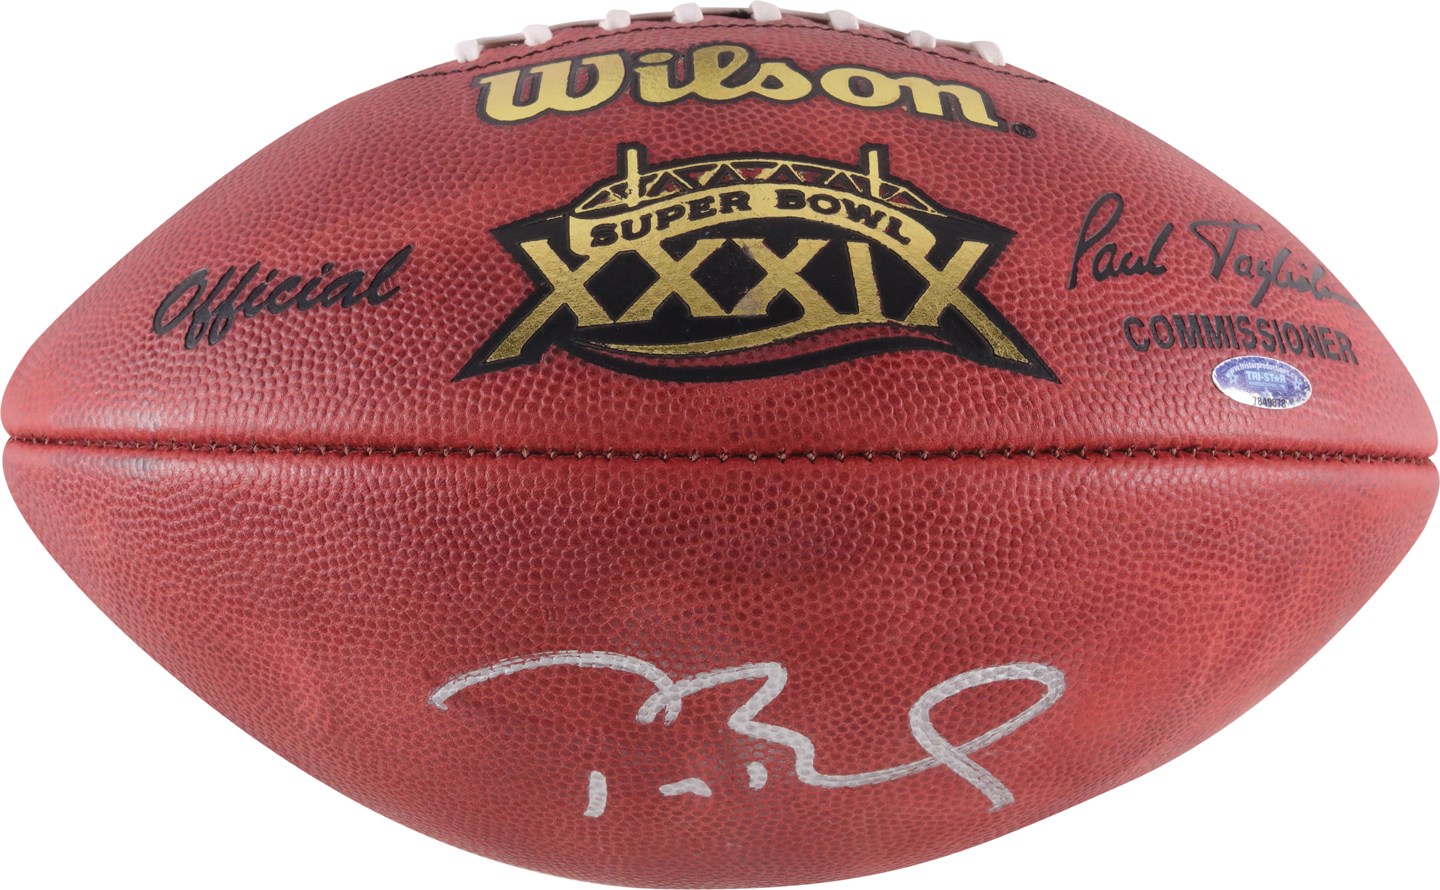 - Tom Brady Signed Super Bowl XXXIX Football (Fanatics & Tristar)